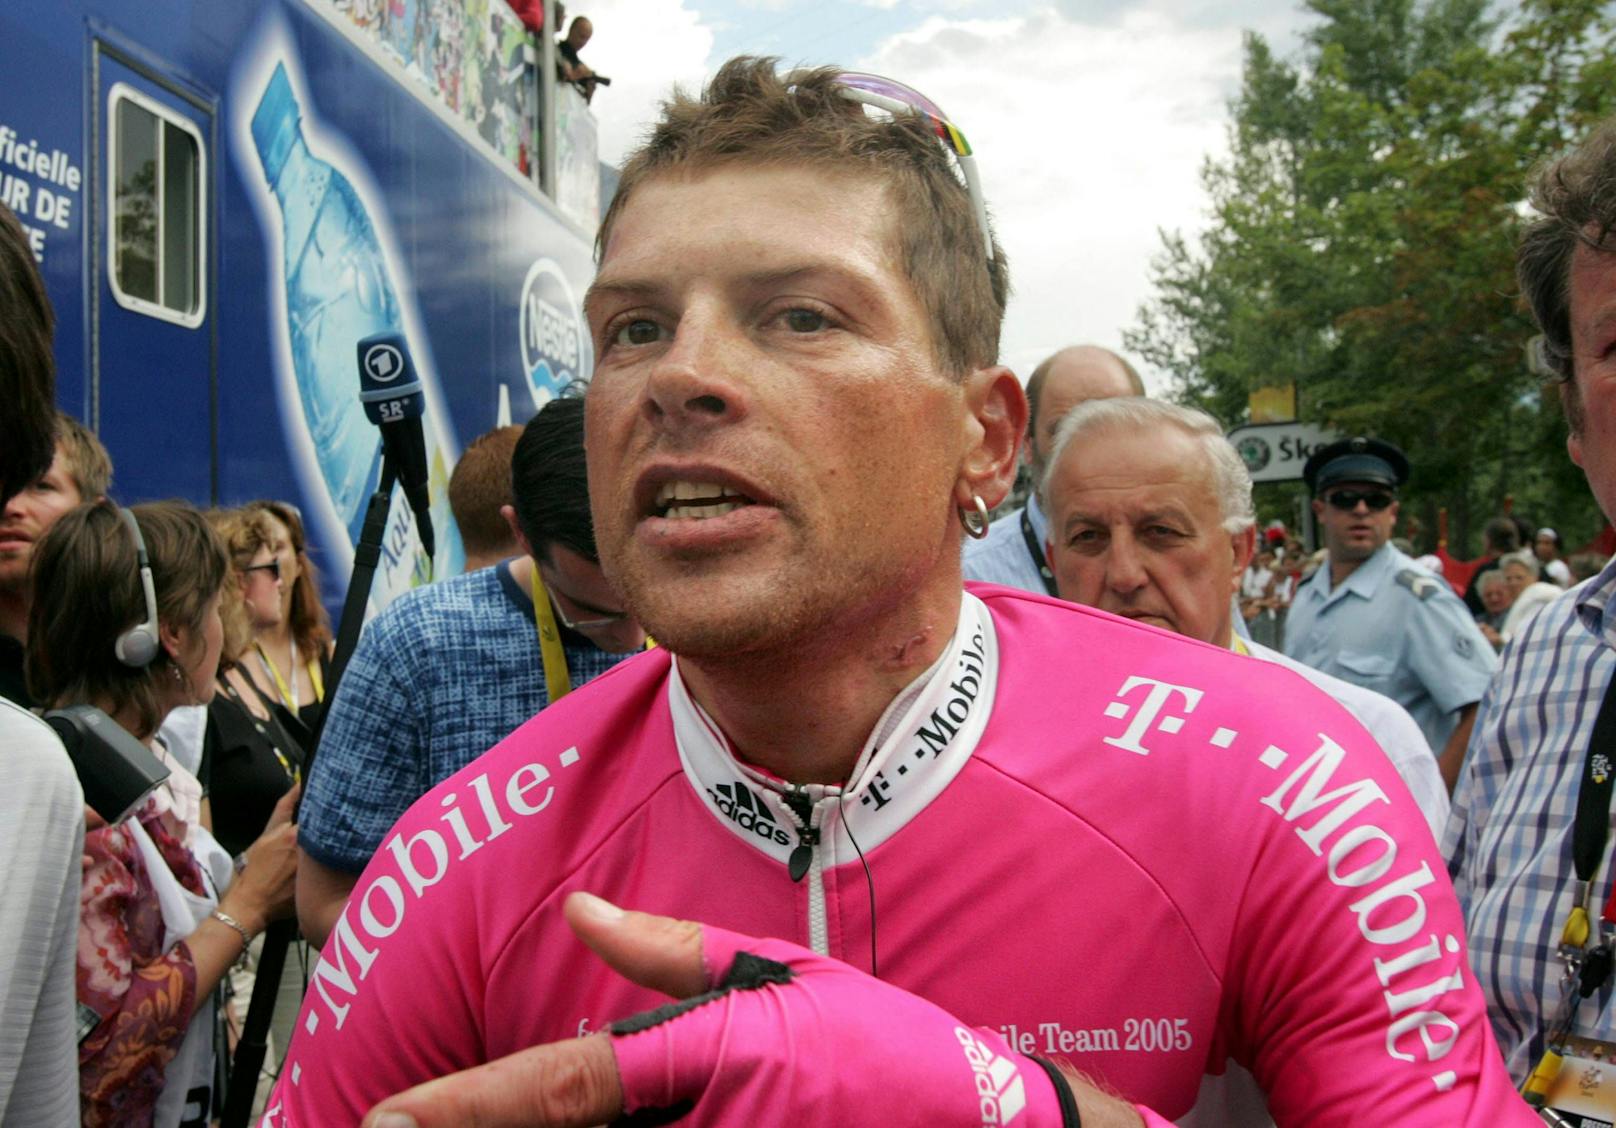 Der ehemalige Tour-de-France-Sieger Jan Ullrich